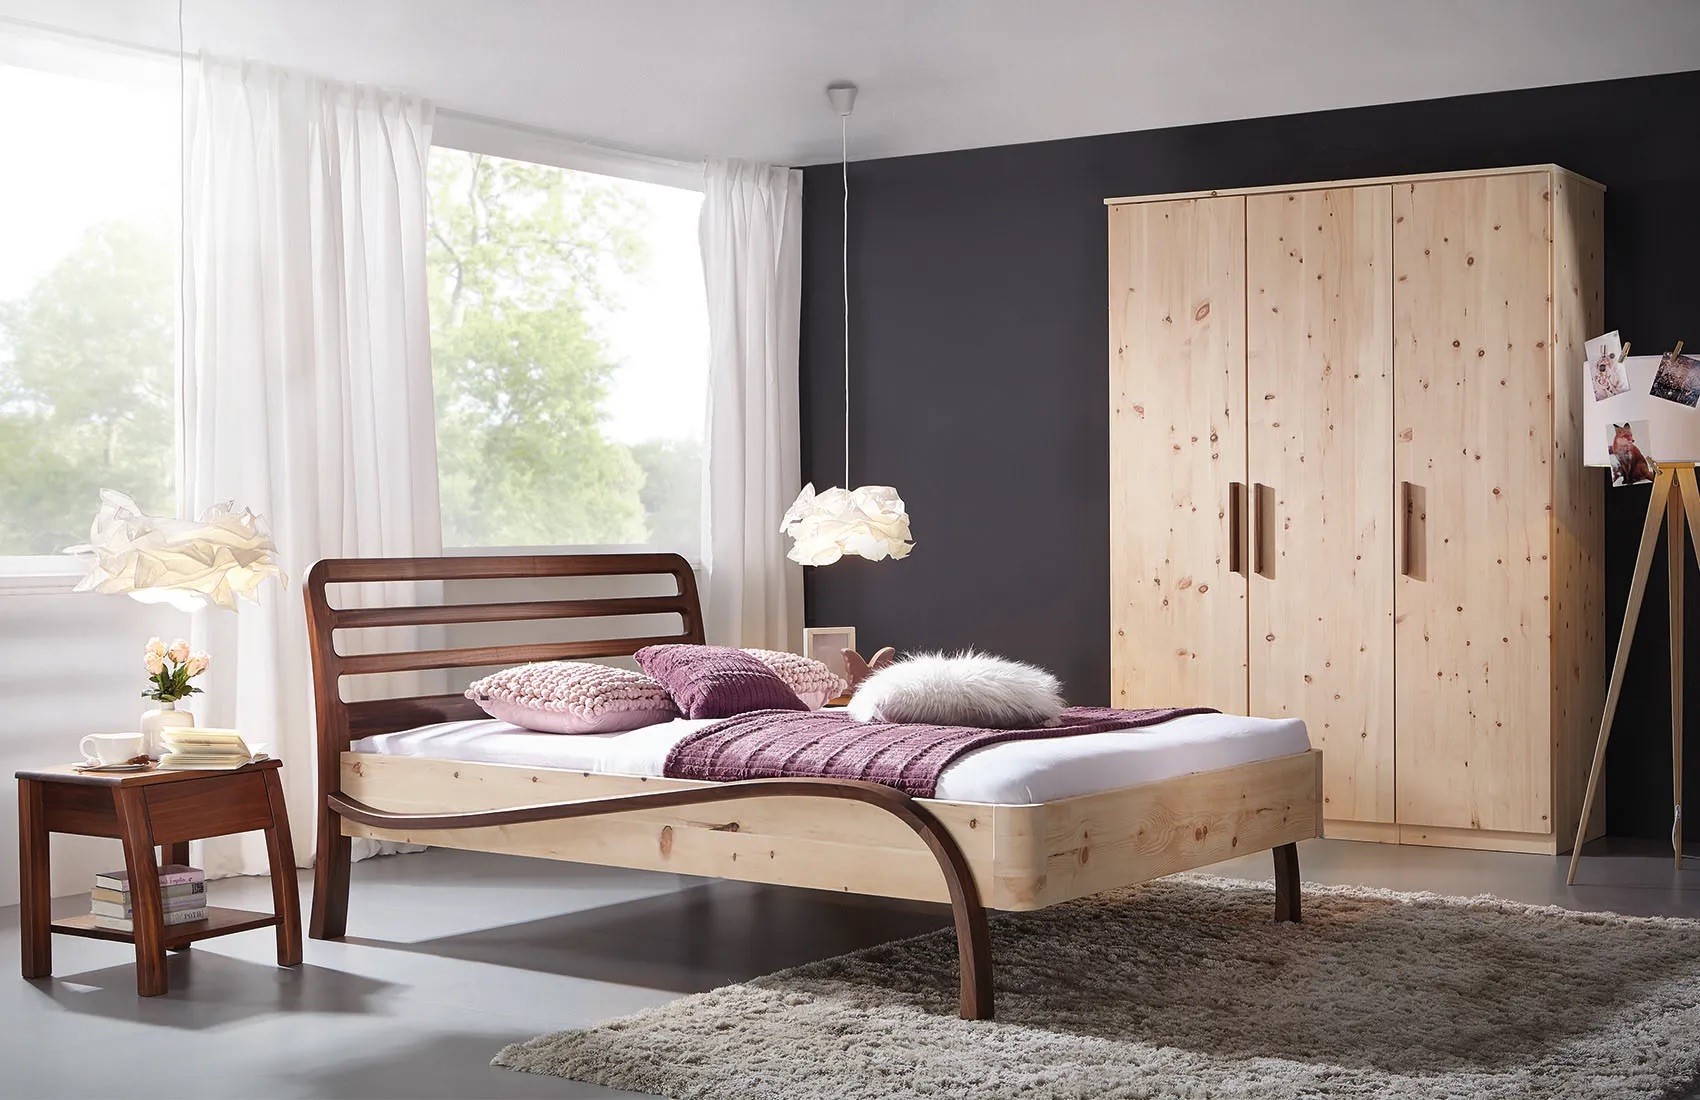 Bett als schönes Möbelstück aus Holz